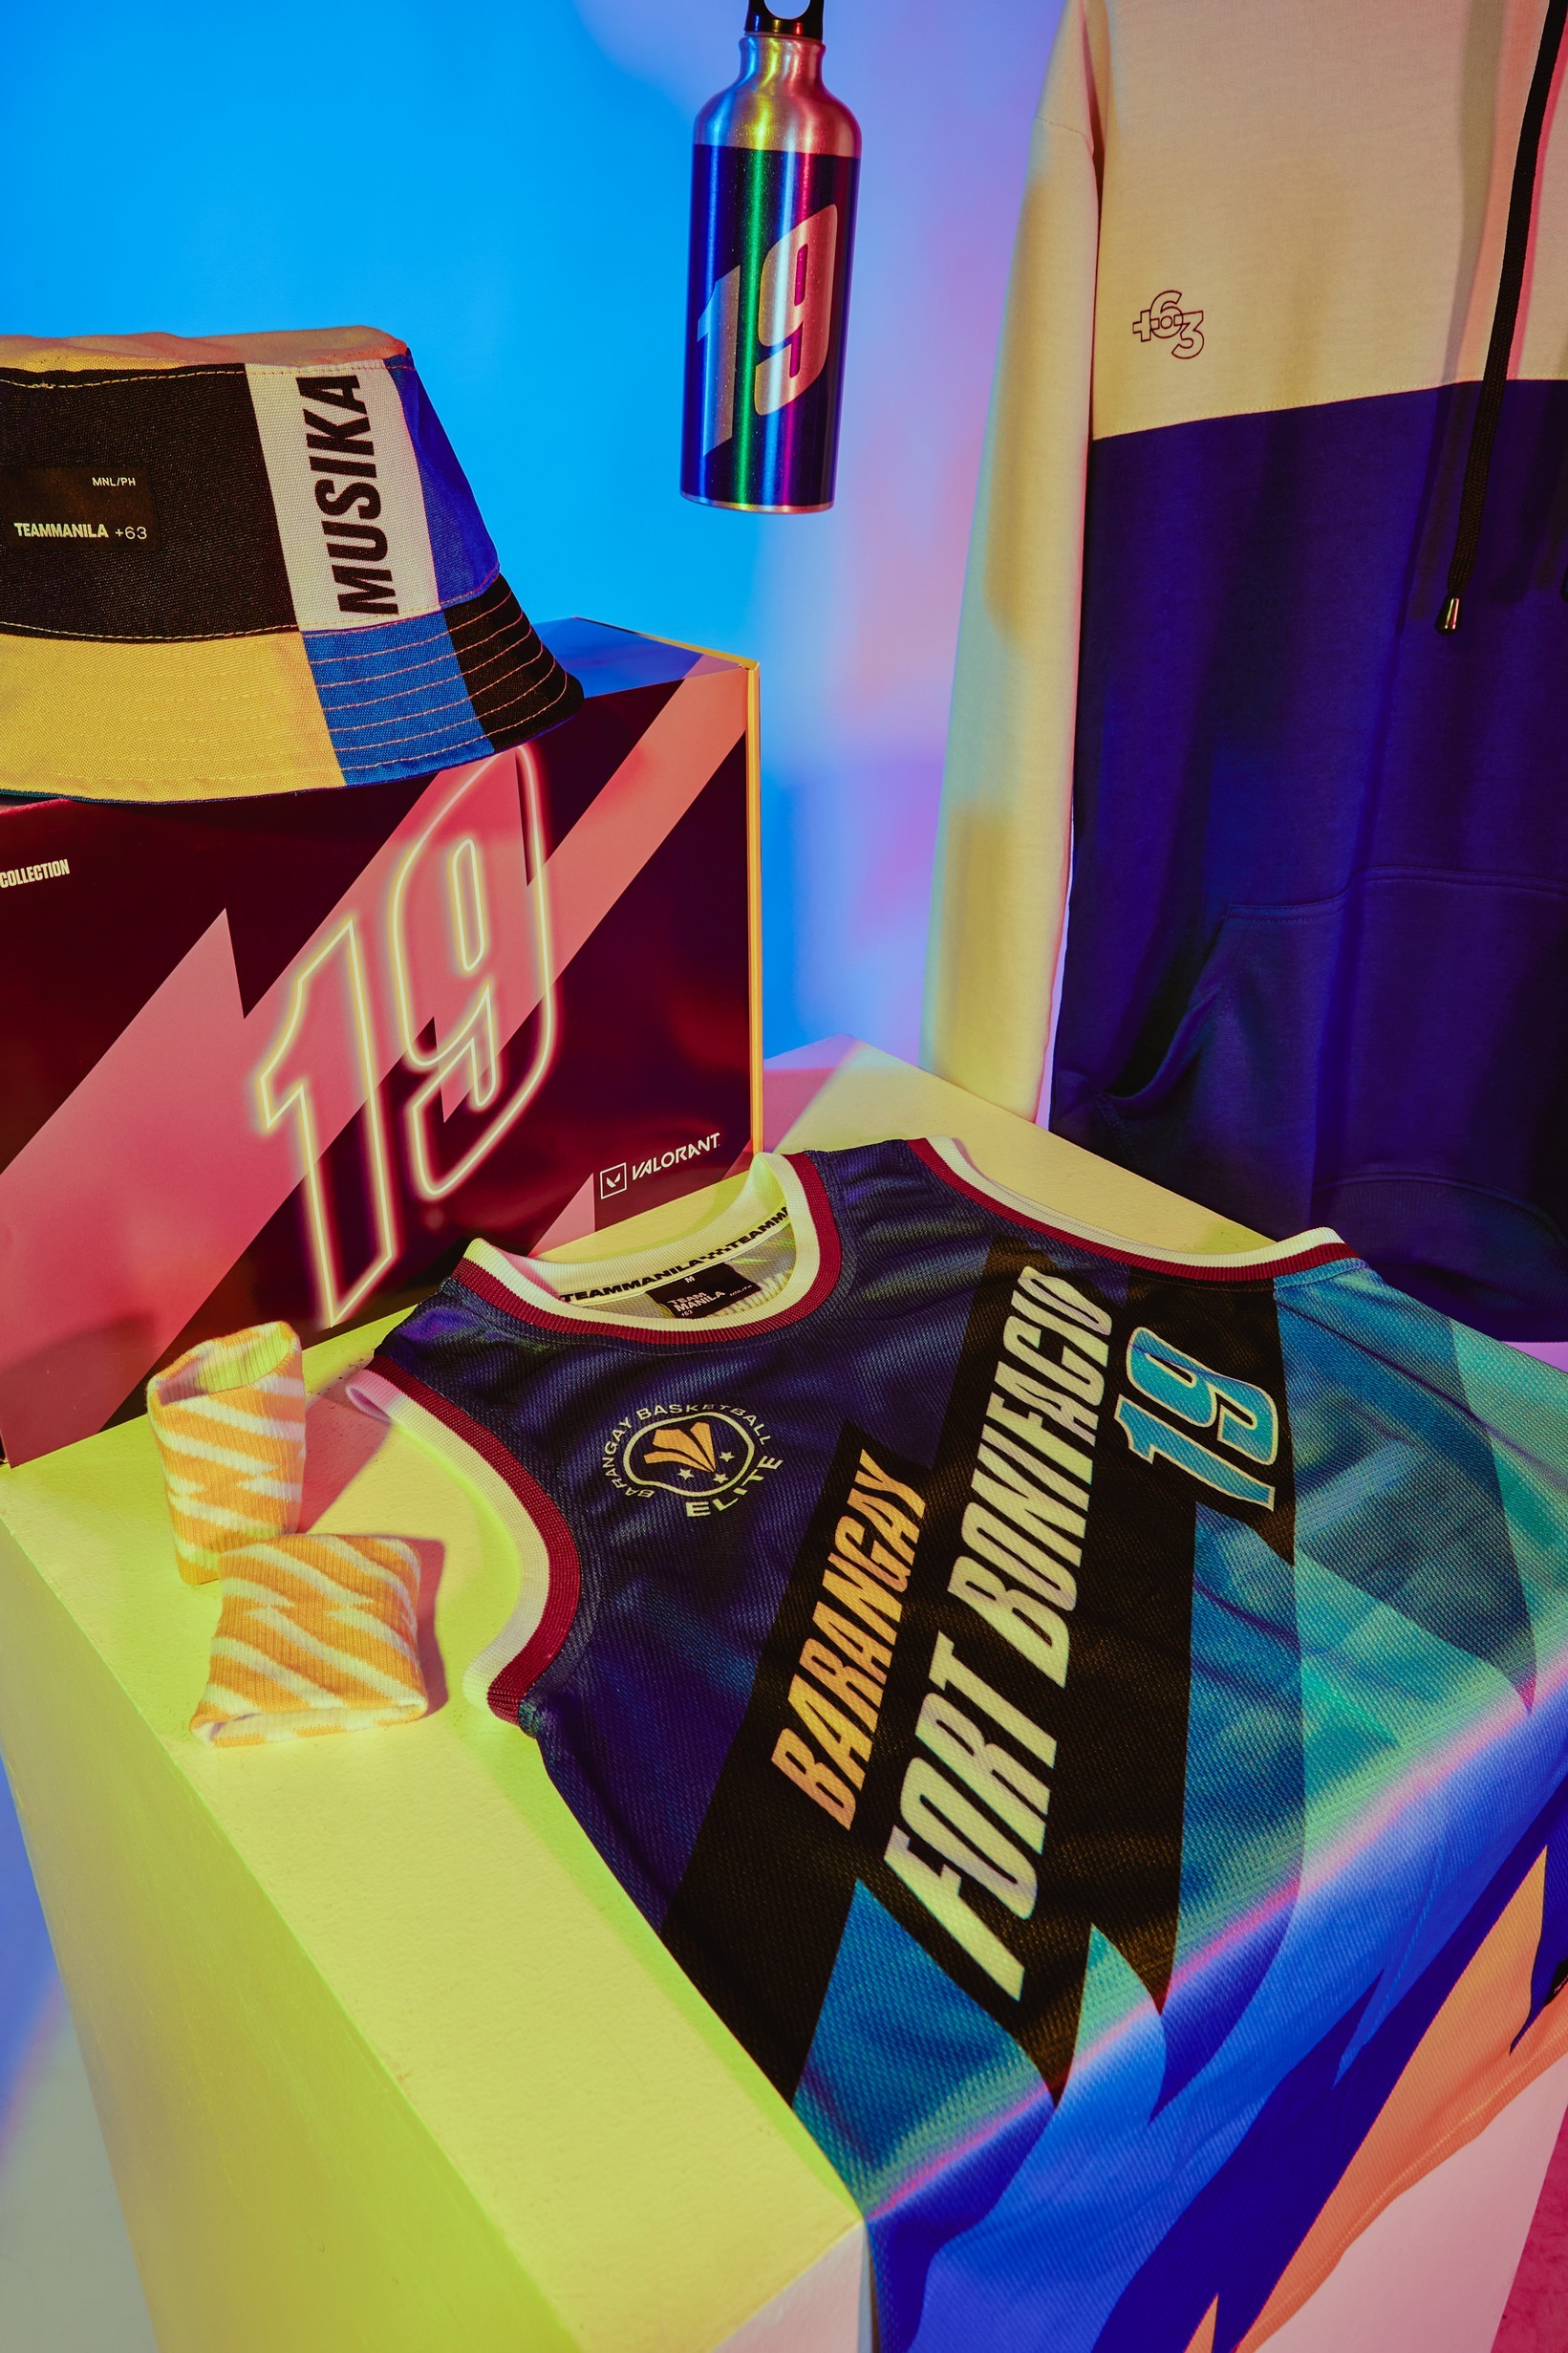 [GIVEAWAY] Win One of Five Valorant x TeamManila Neon Swag Kits